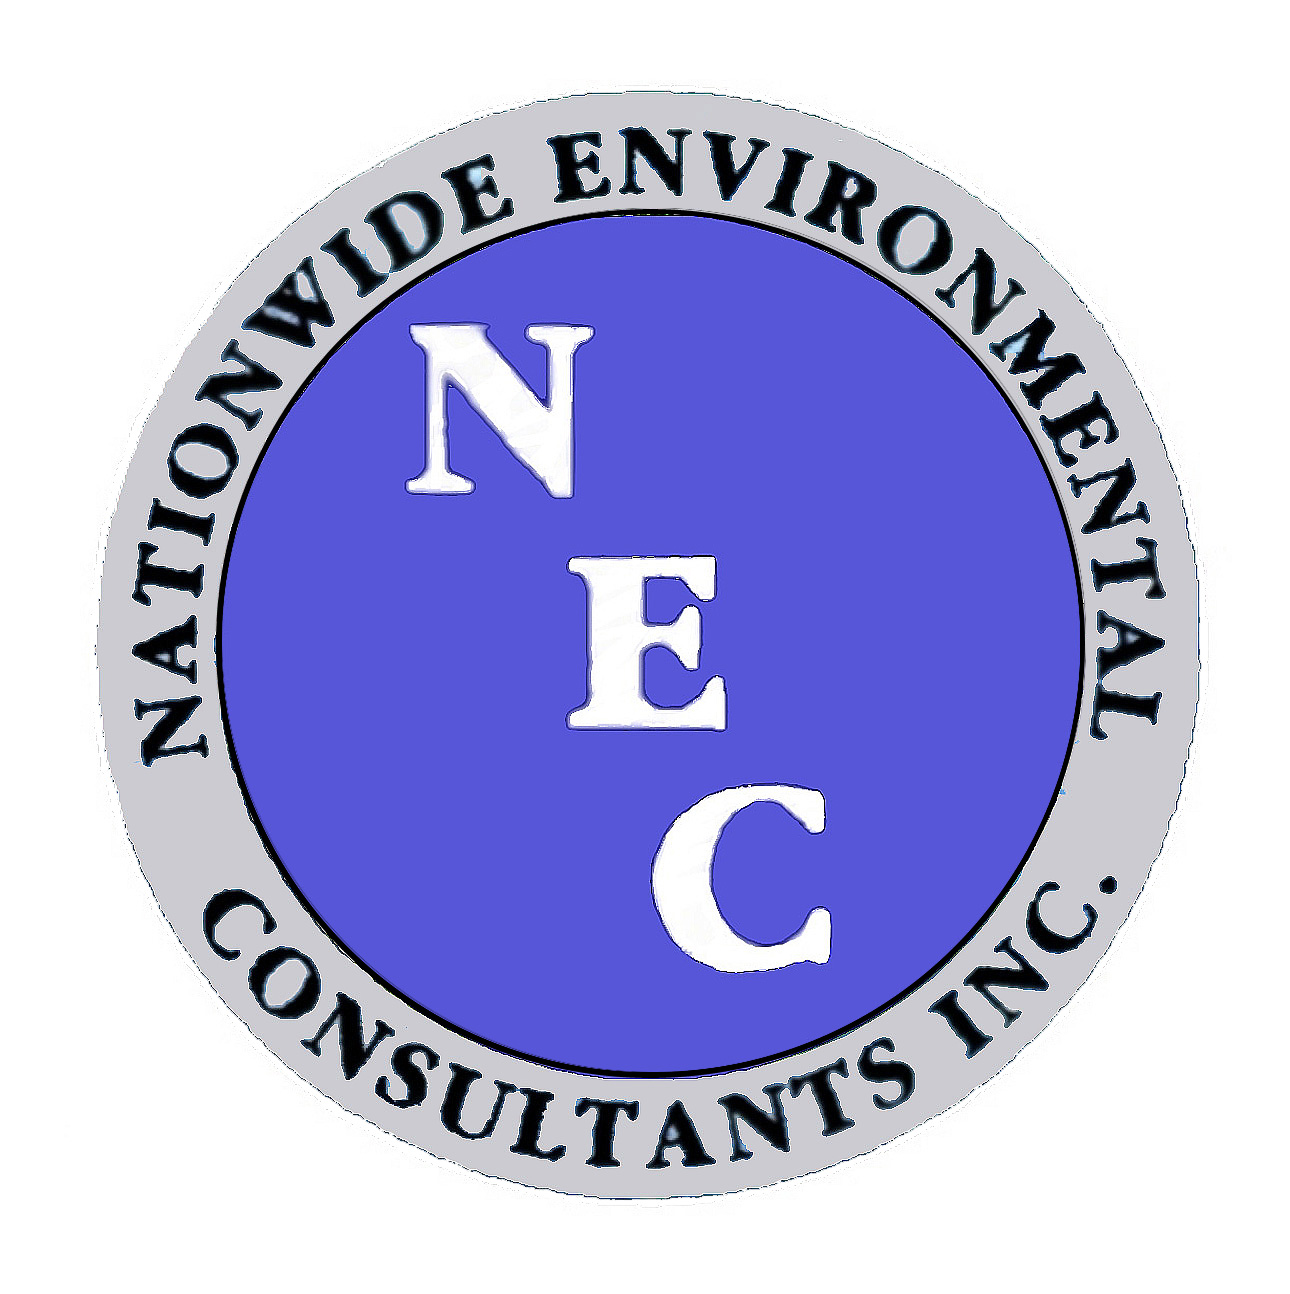 NEC - Nationwide Environmental